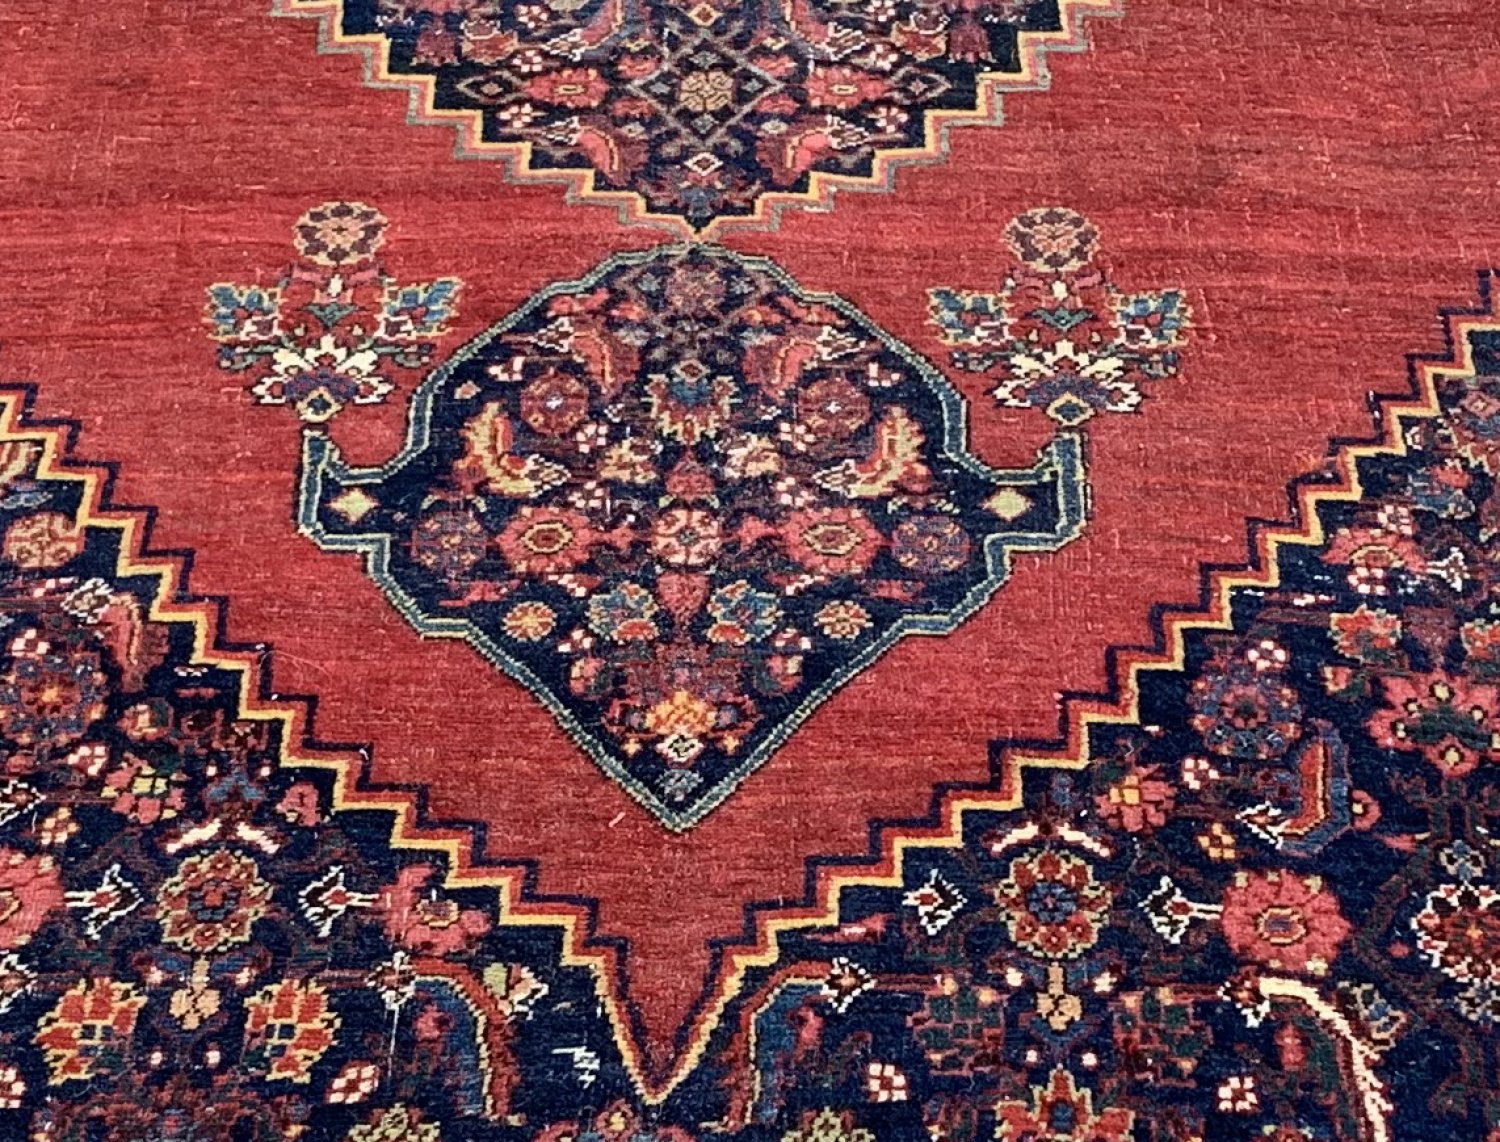 Bidjar carpet from western Persia,